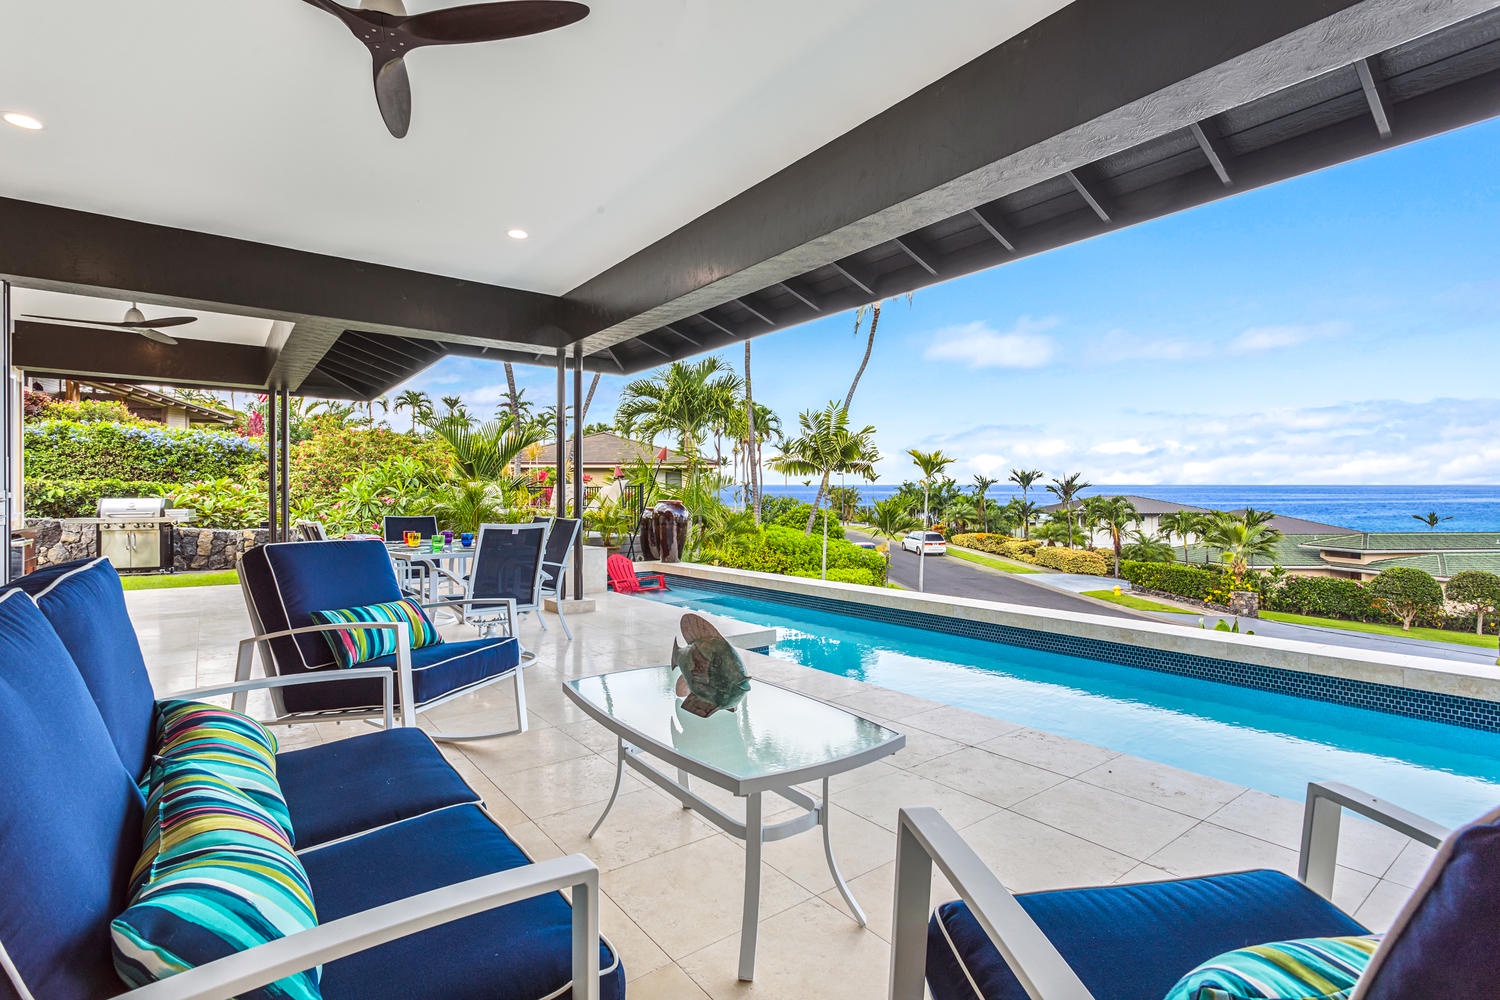 Kailua Kona Vacation Rentals, Ohana le'ale'a - Expansive lanai and private pool